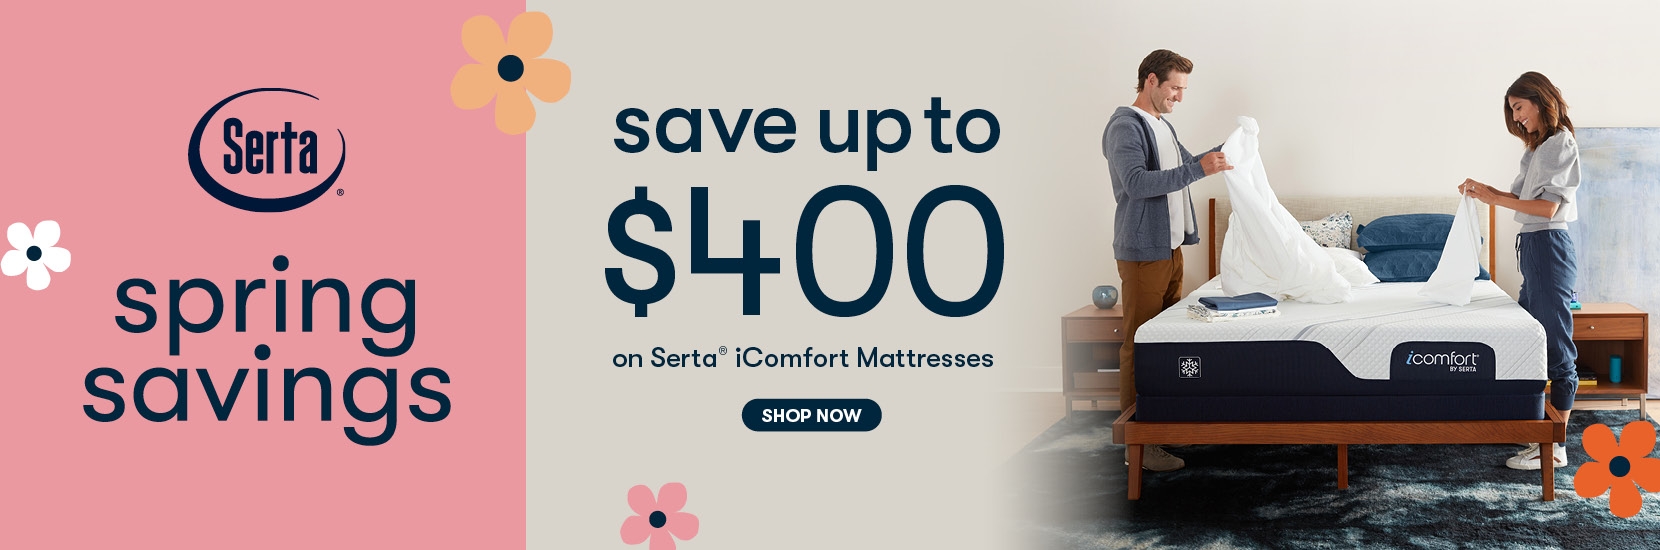 Serta-iComfort-Spring-Savings-Desktop-1660x550-A.jpg